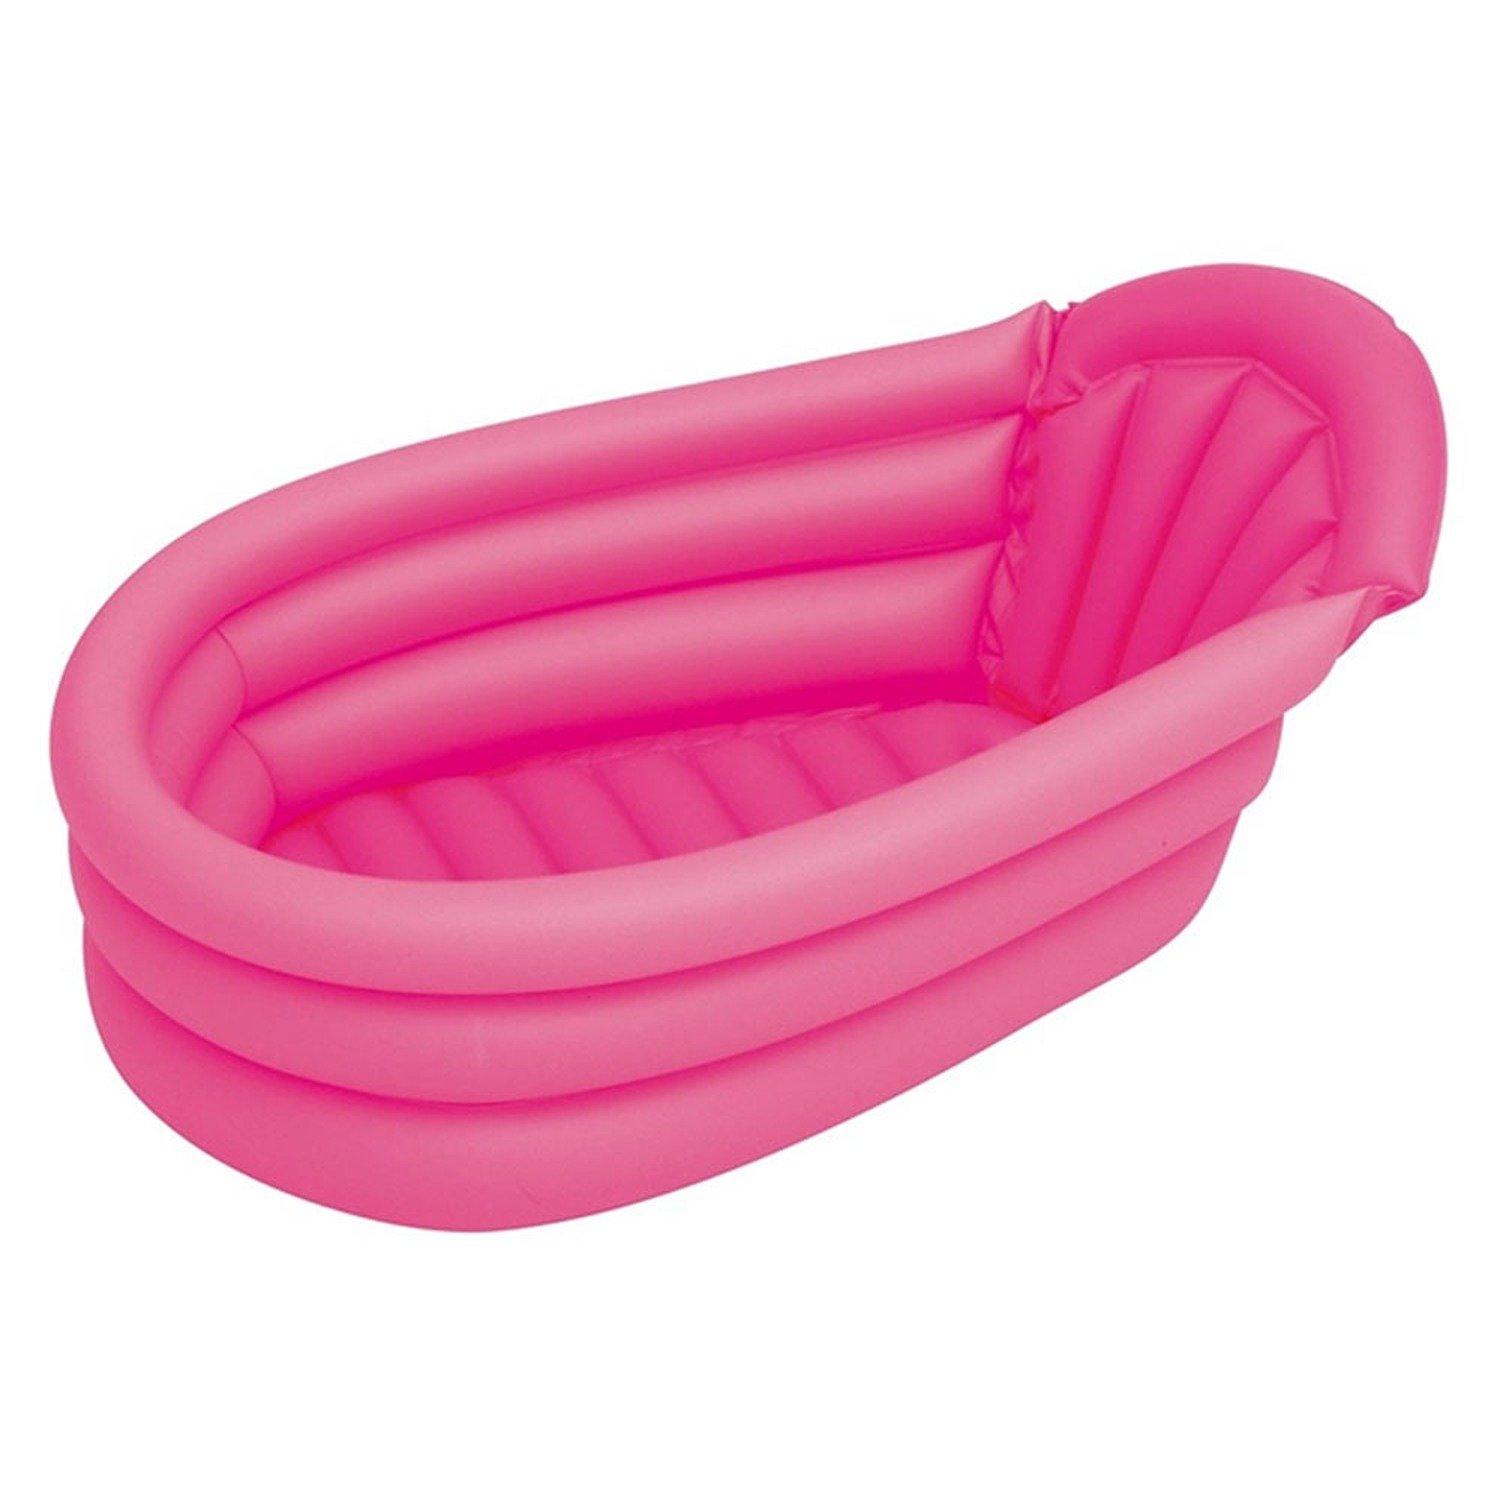 Baby Inflatable Bath Tub Pink